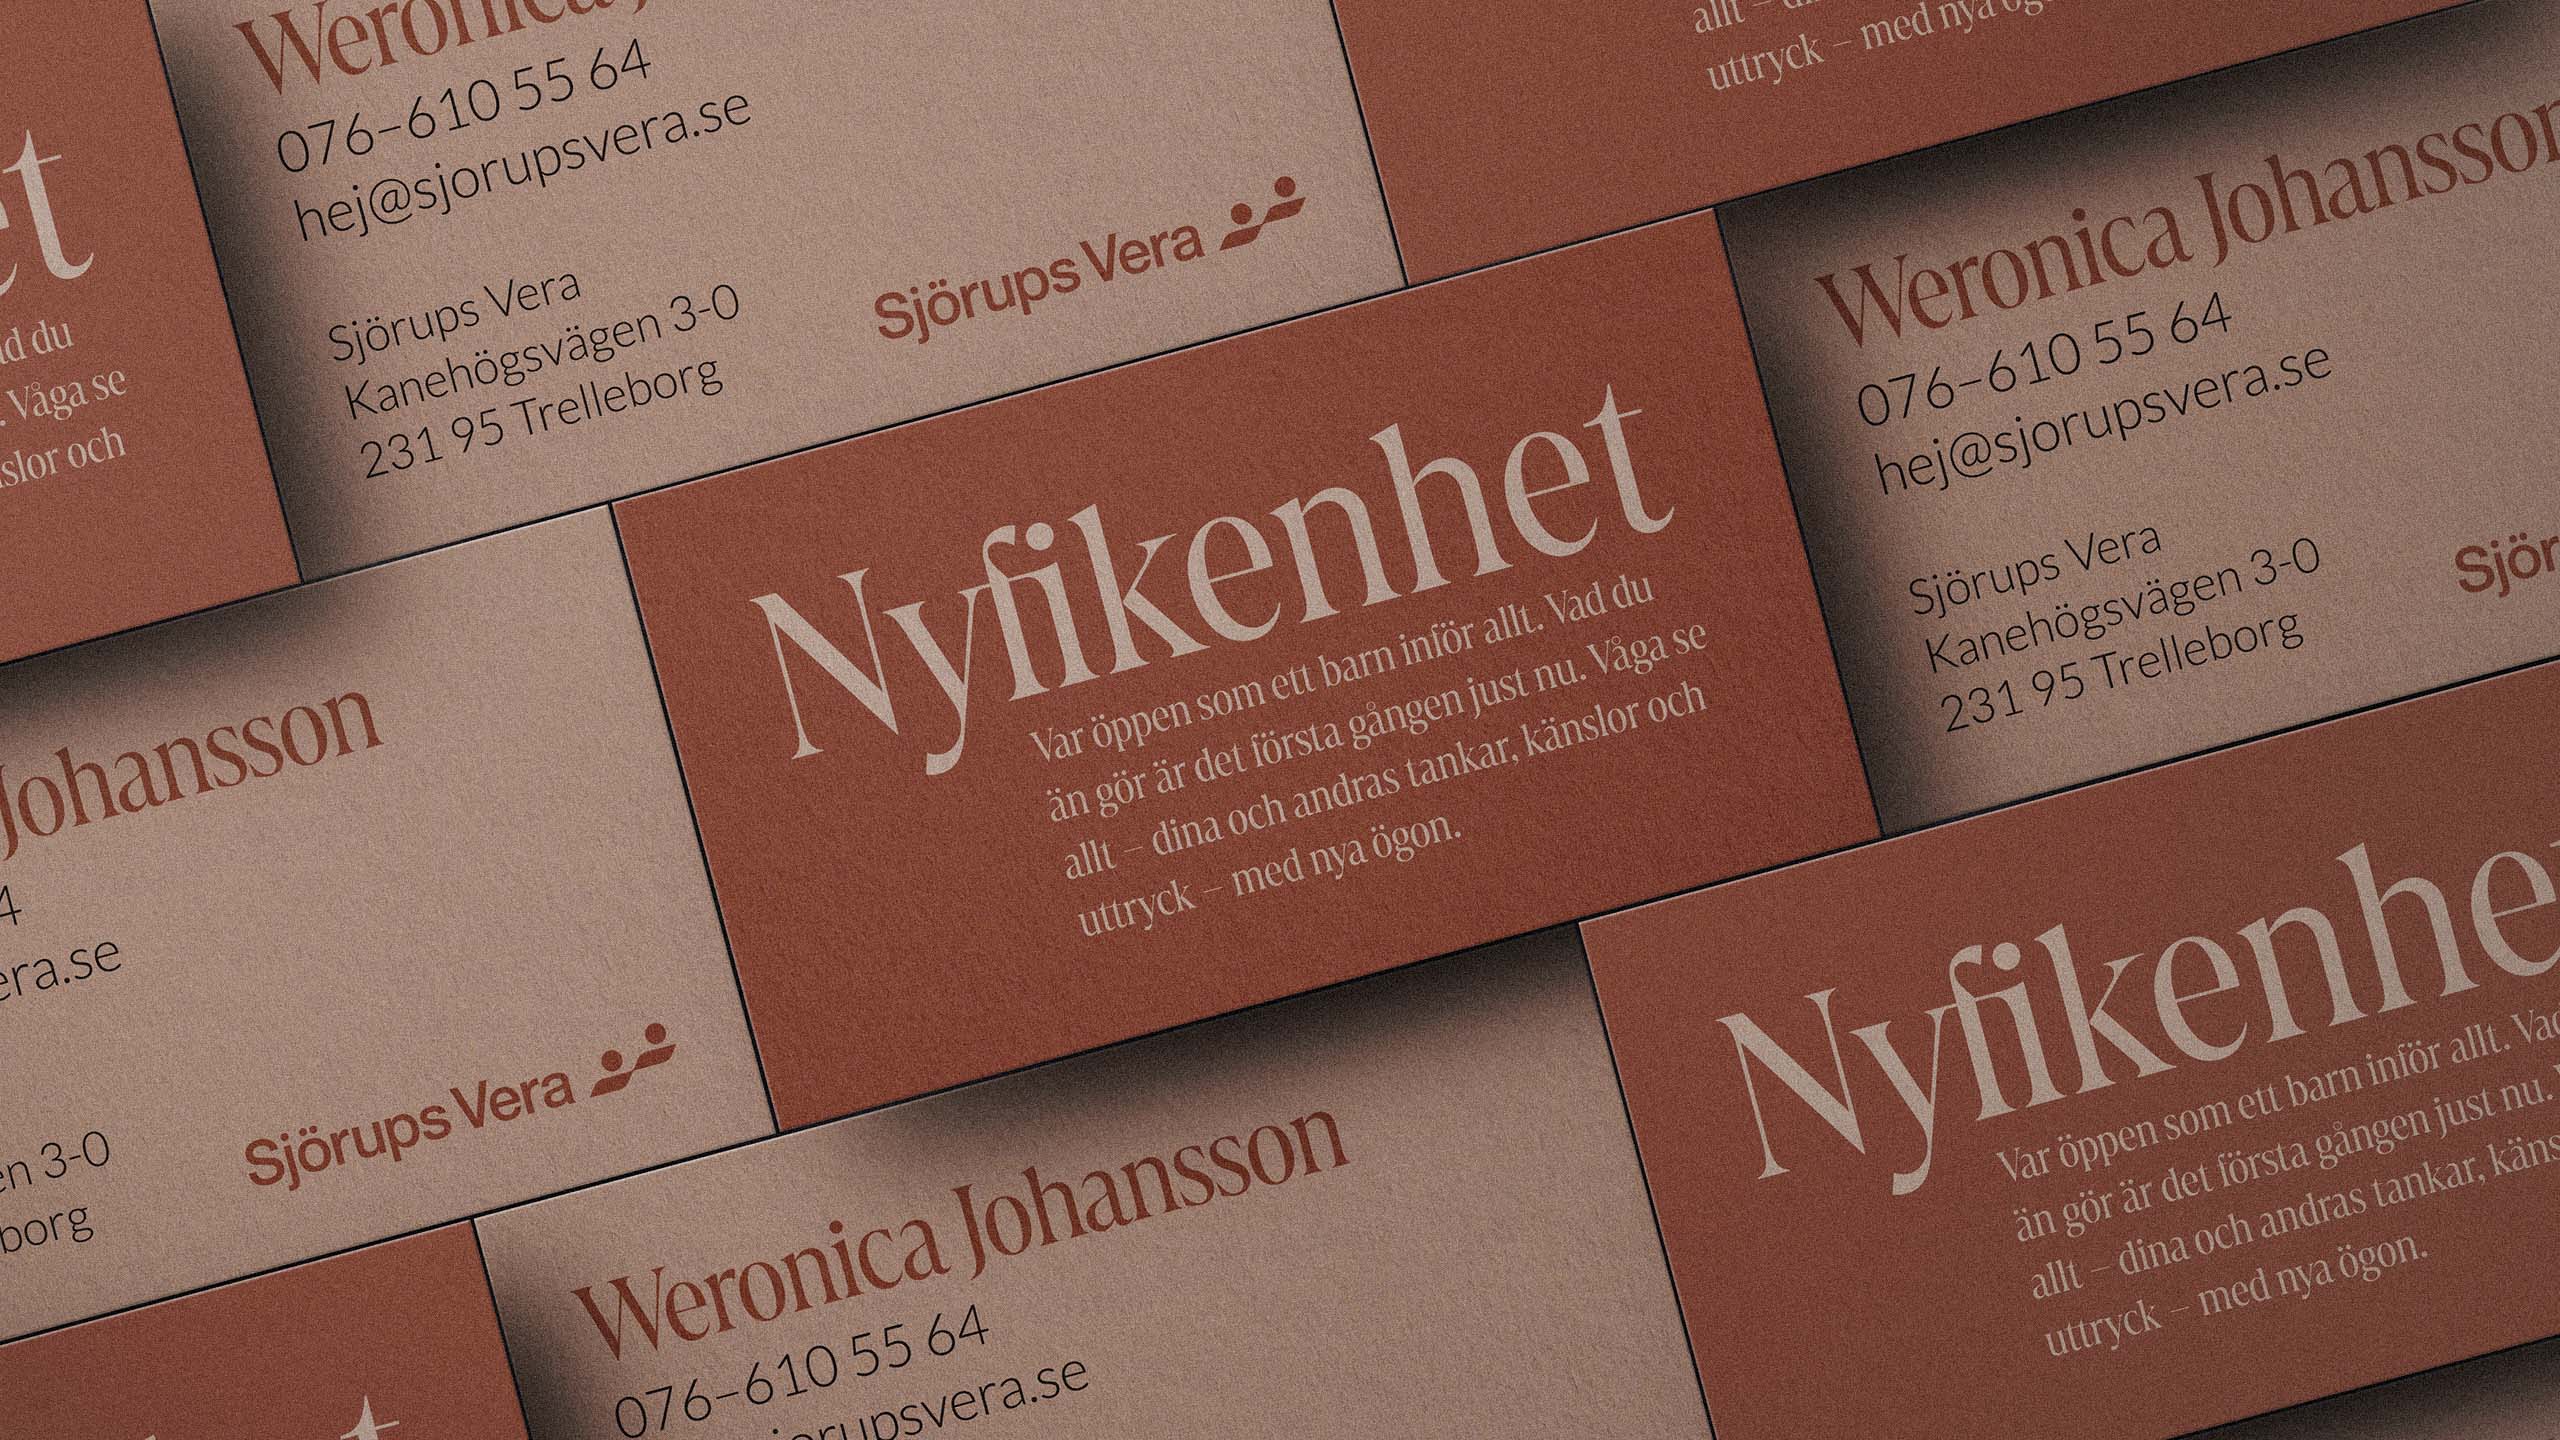 Business cards mockup with the visual identitet for Sjörups Vera.